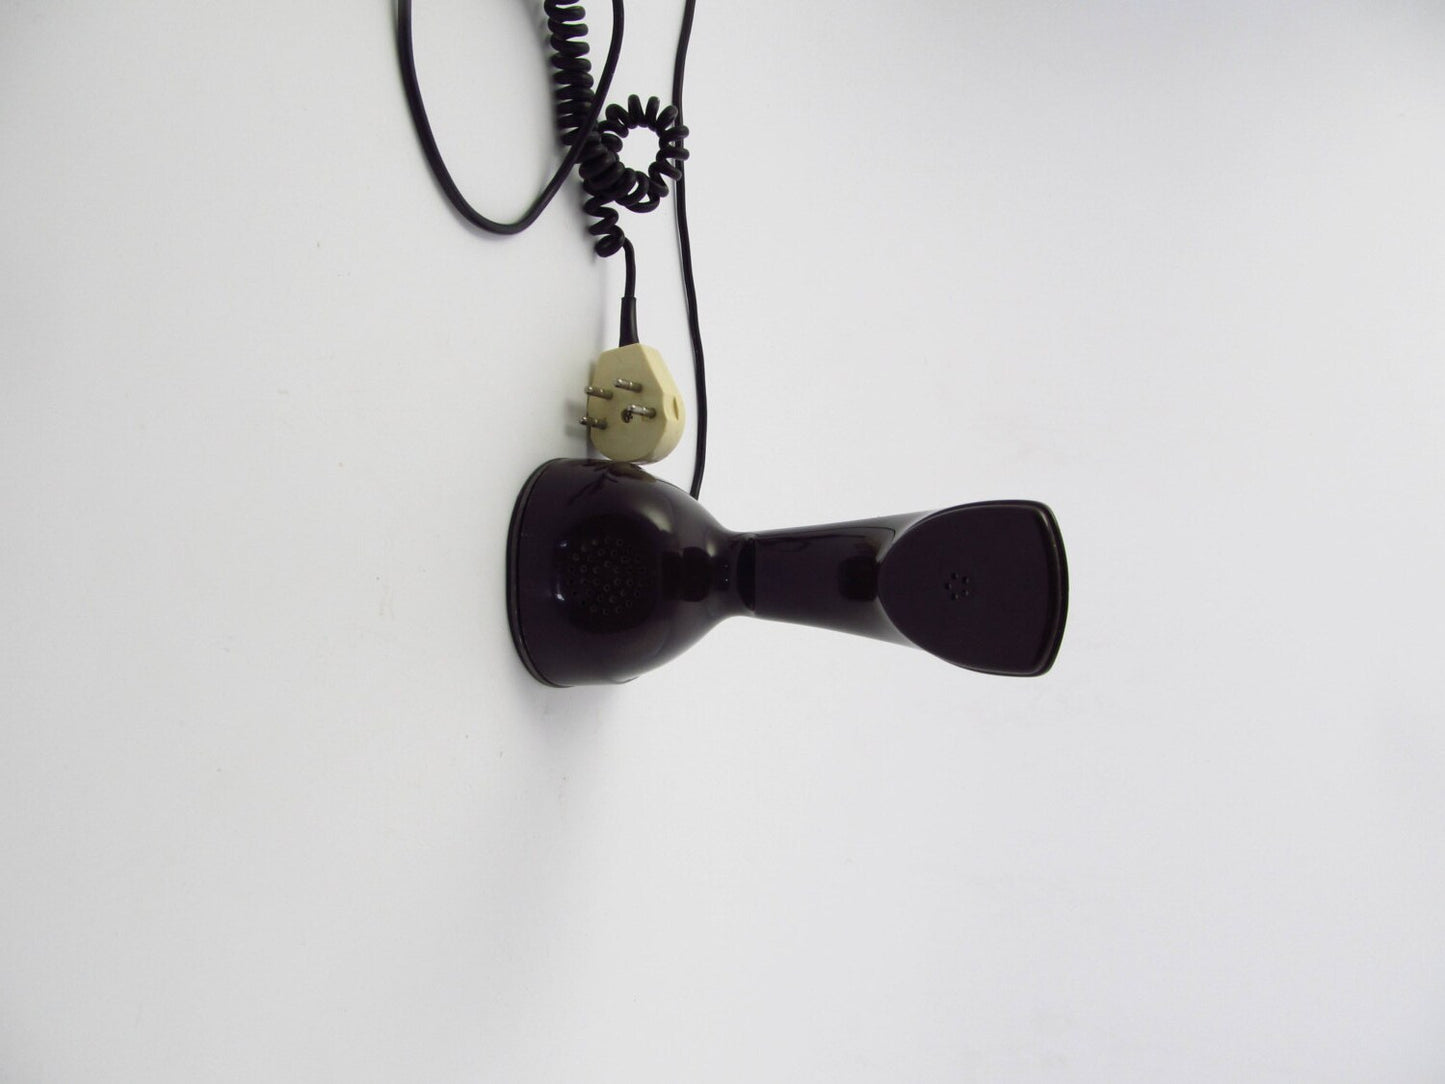 Very dark Brown Ericofon famous mid century modern telephone from ericsson